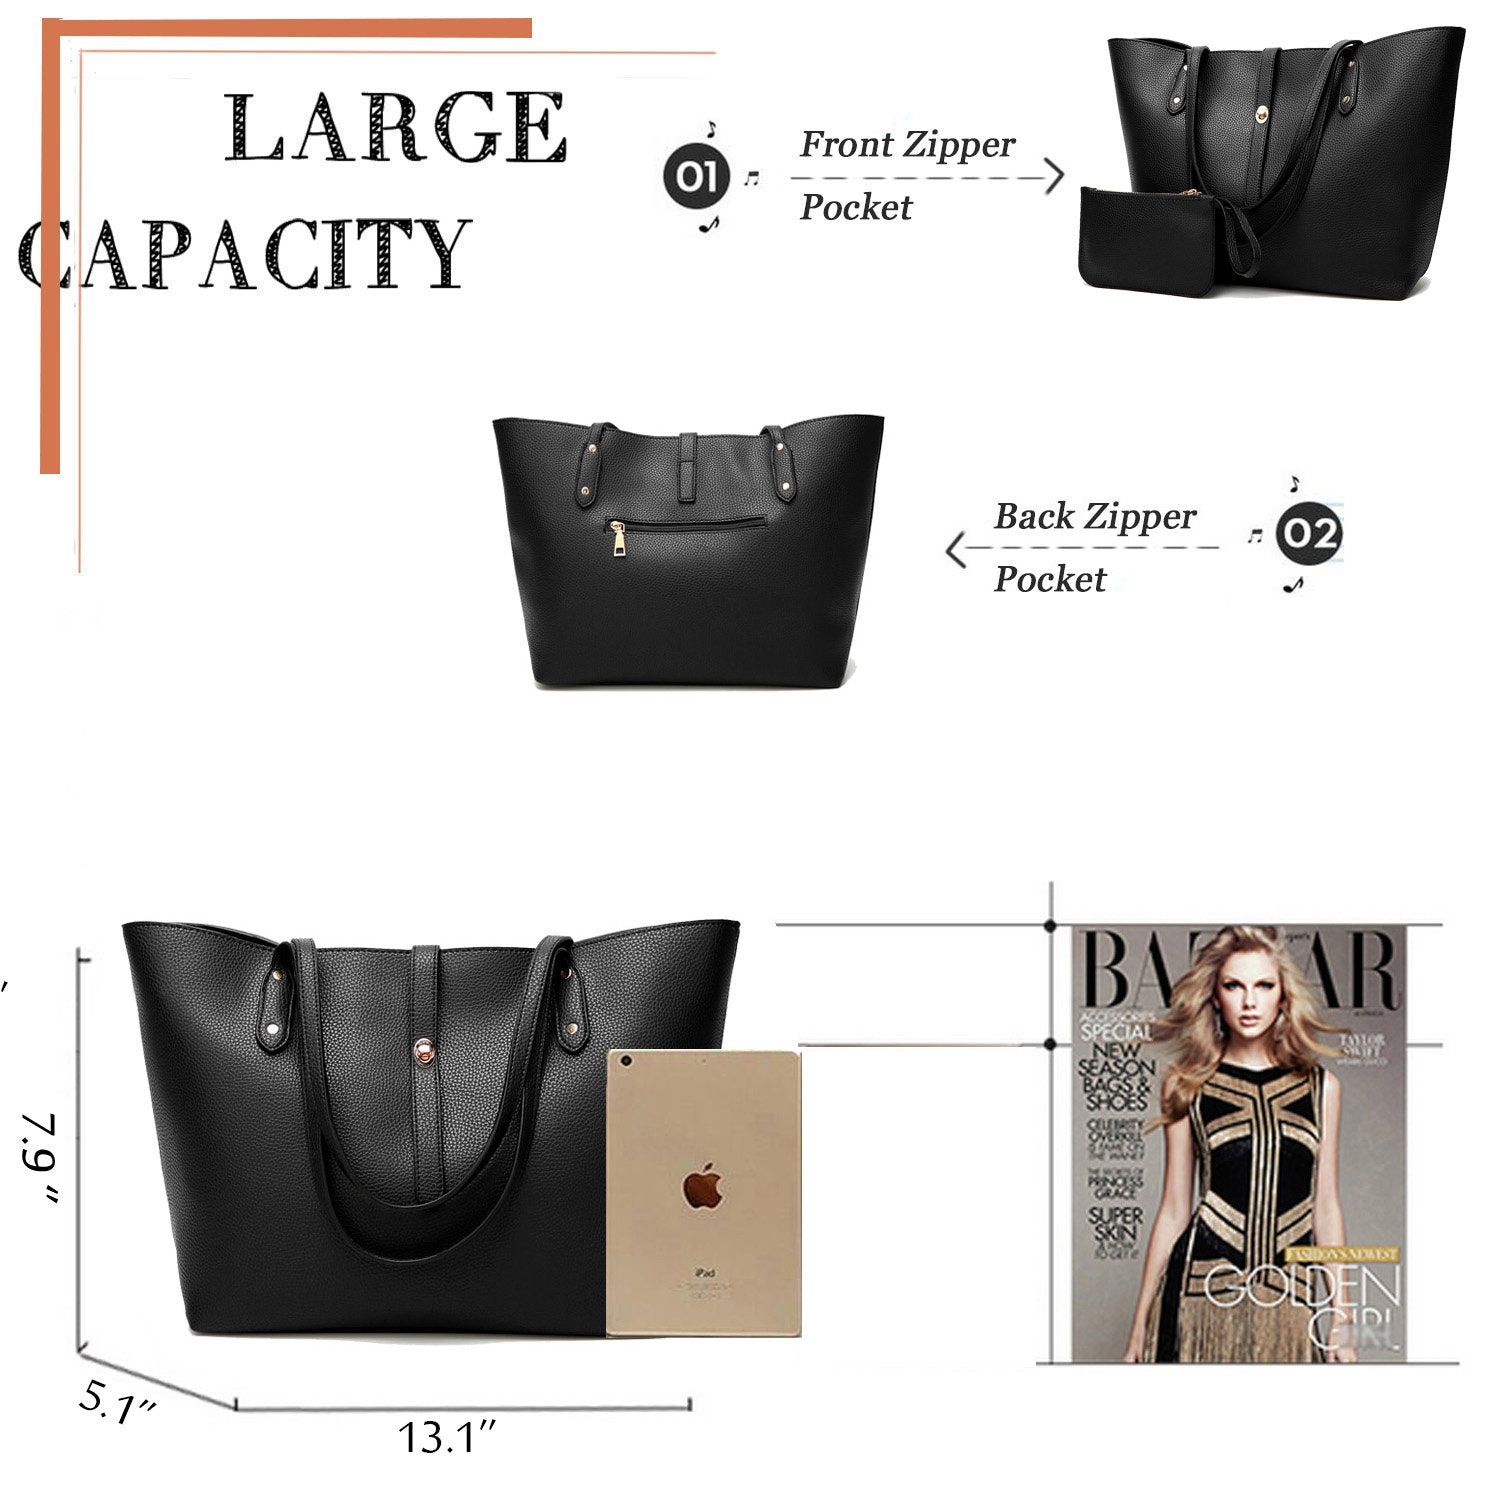 Satchel Purses And Handbags For Women Shoulder Tote Bags Wallets - ebowsos